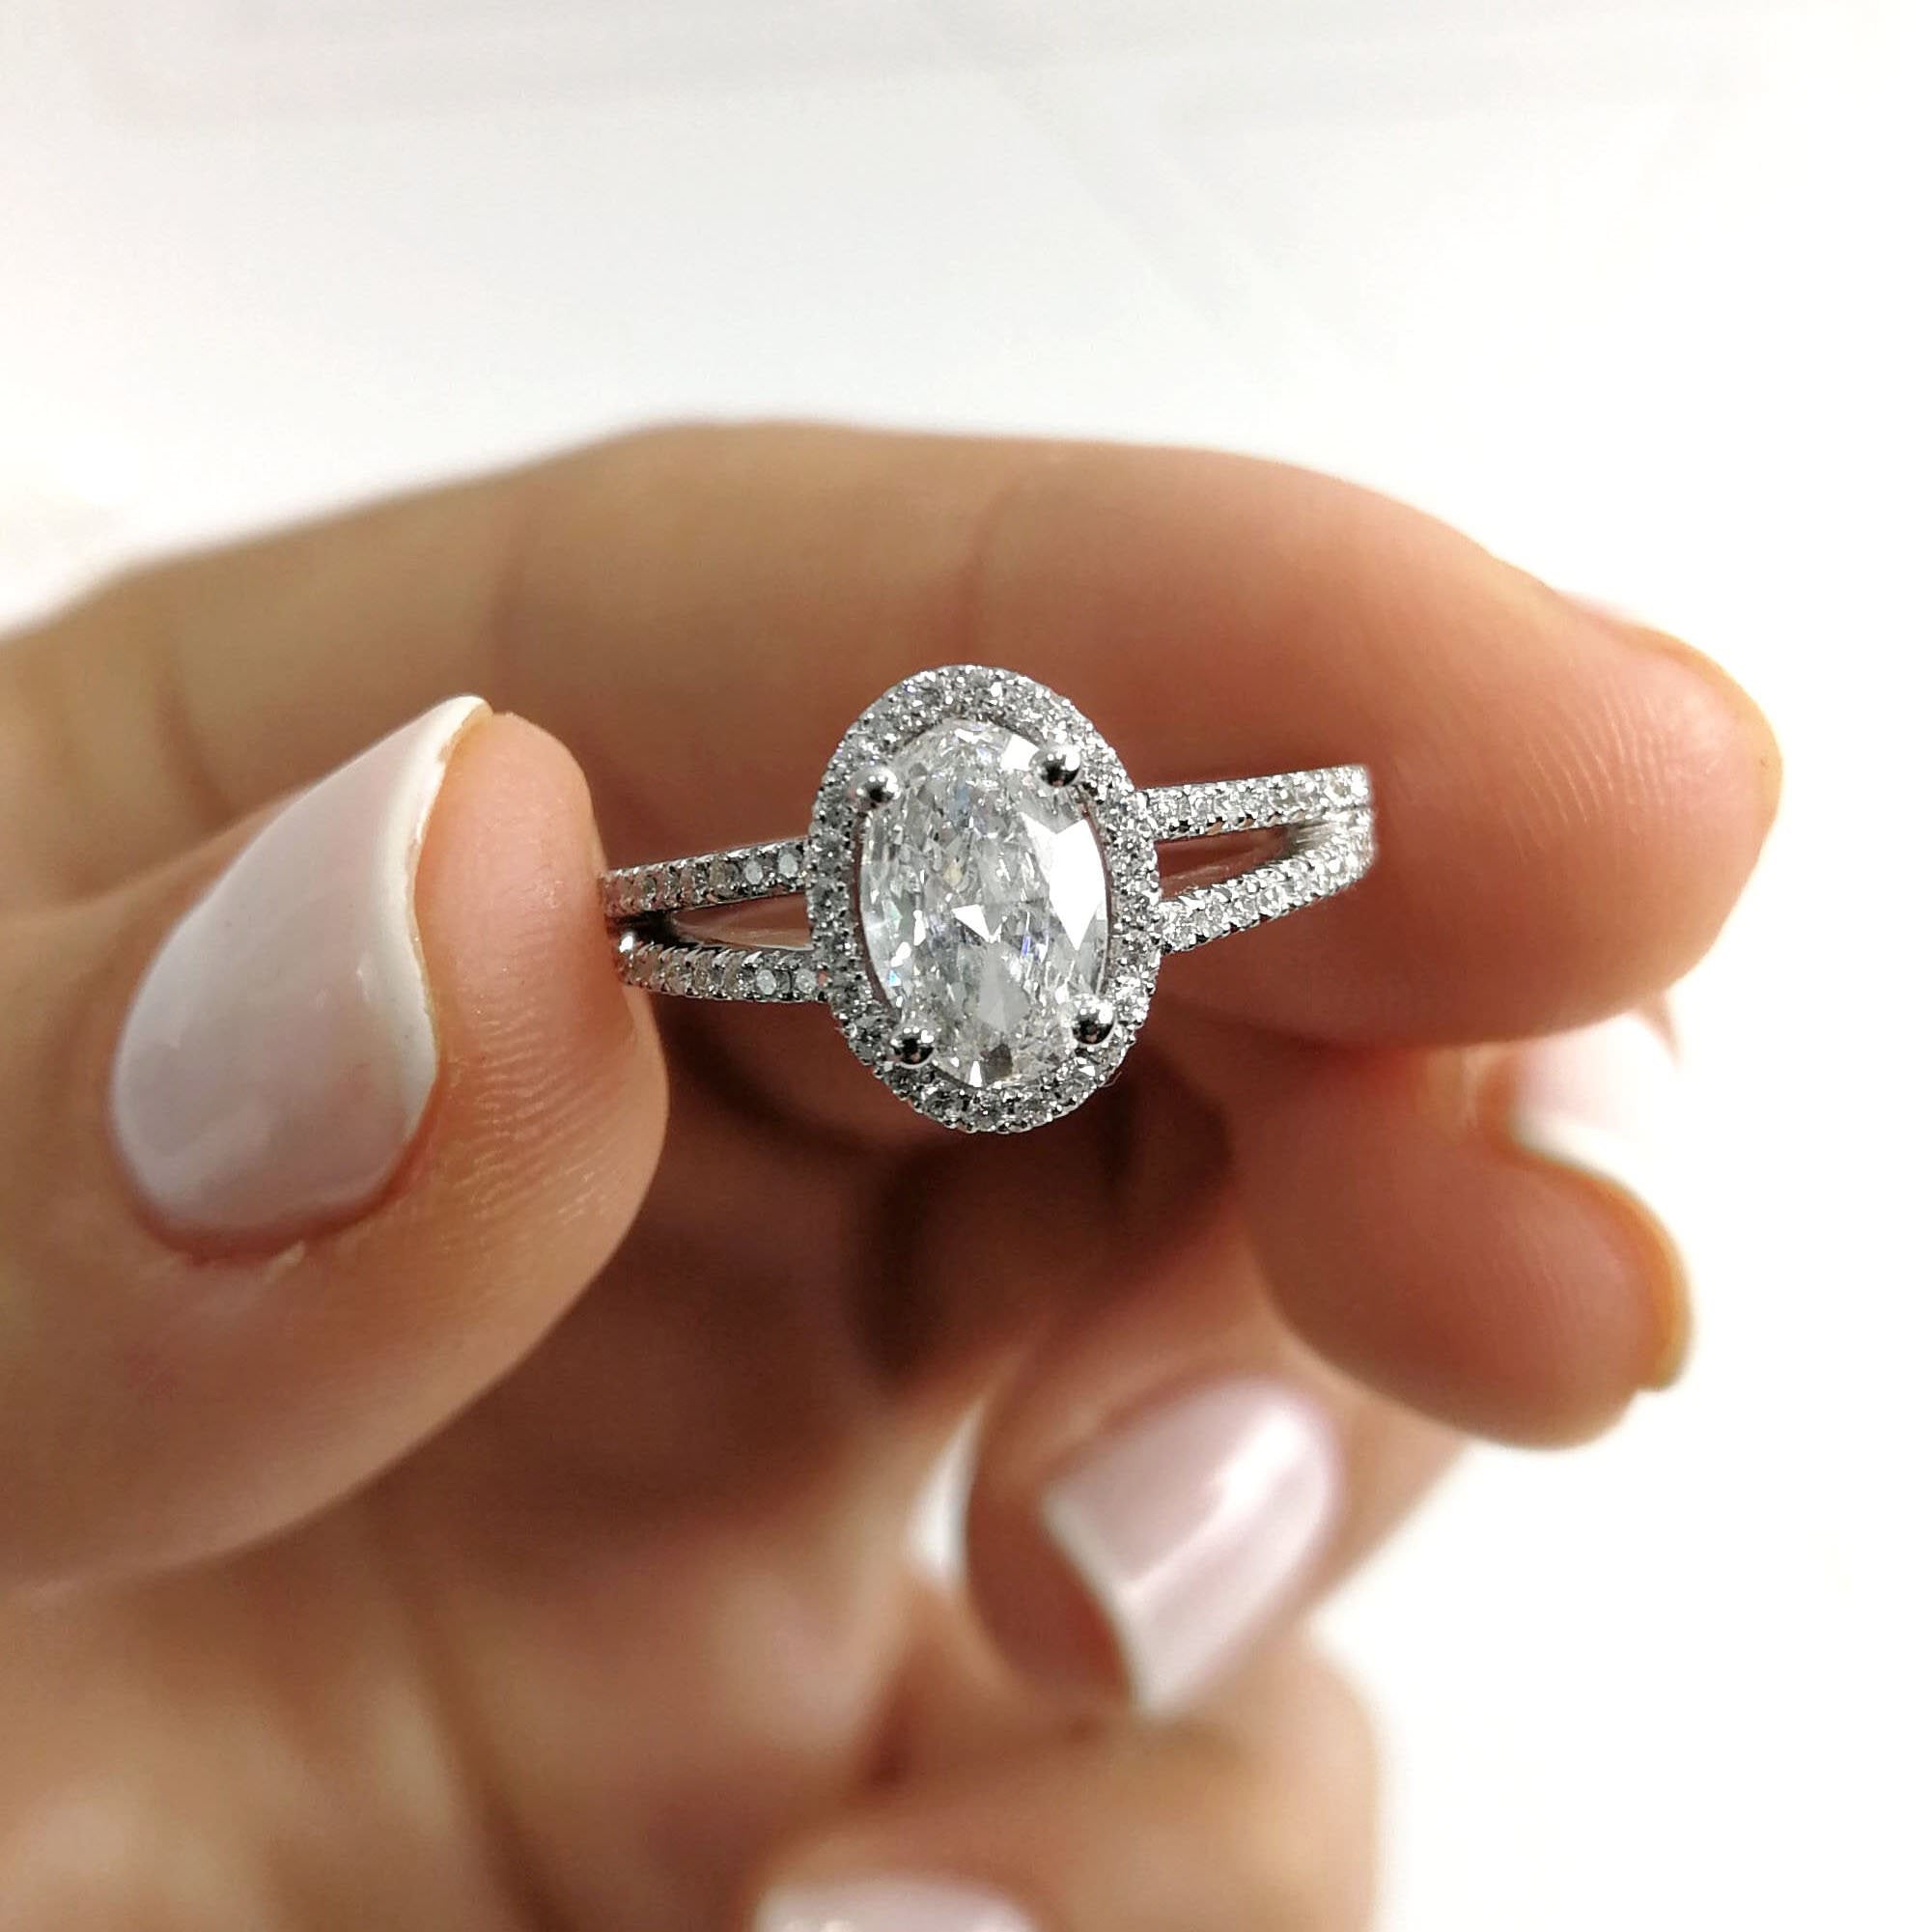 Brielle Diamond Engagement Ring   (1.2 Carat) -14K White Gold